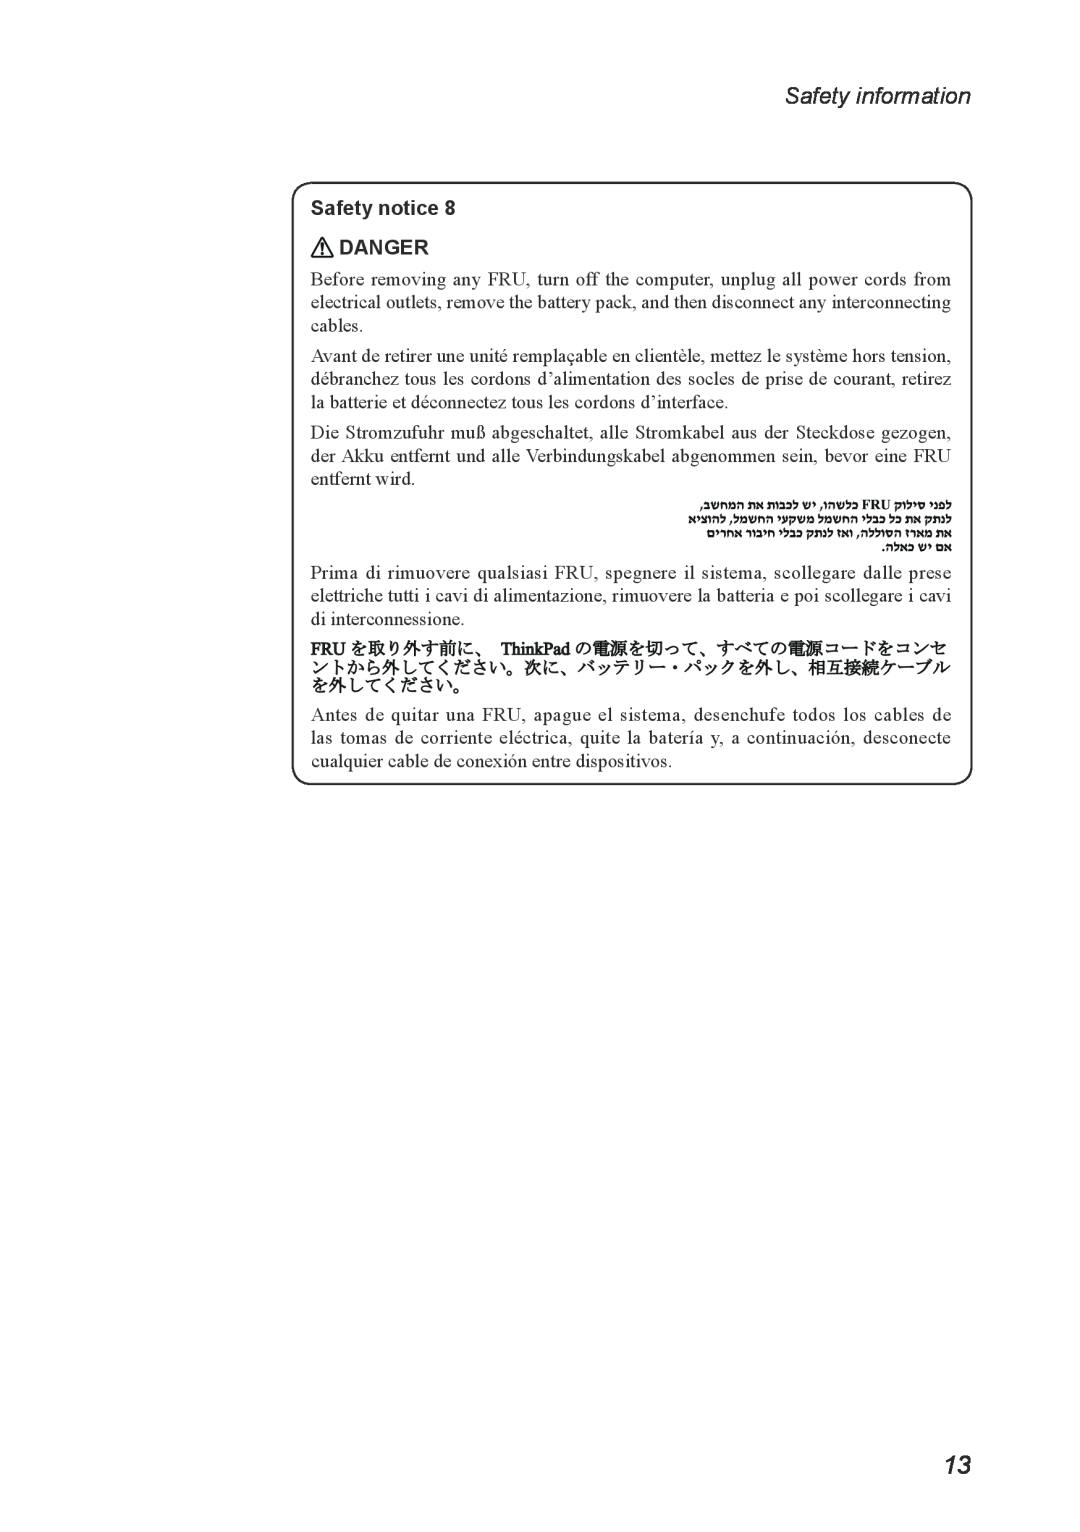 Lenovo G560 manual Safety information, Safety notice DANGER 